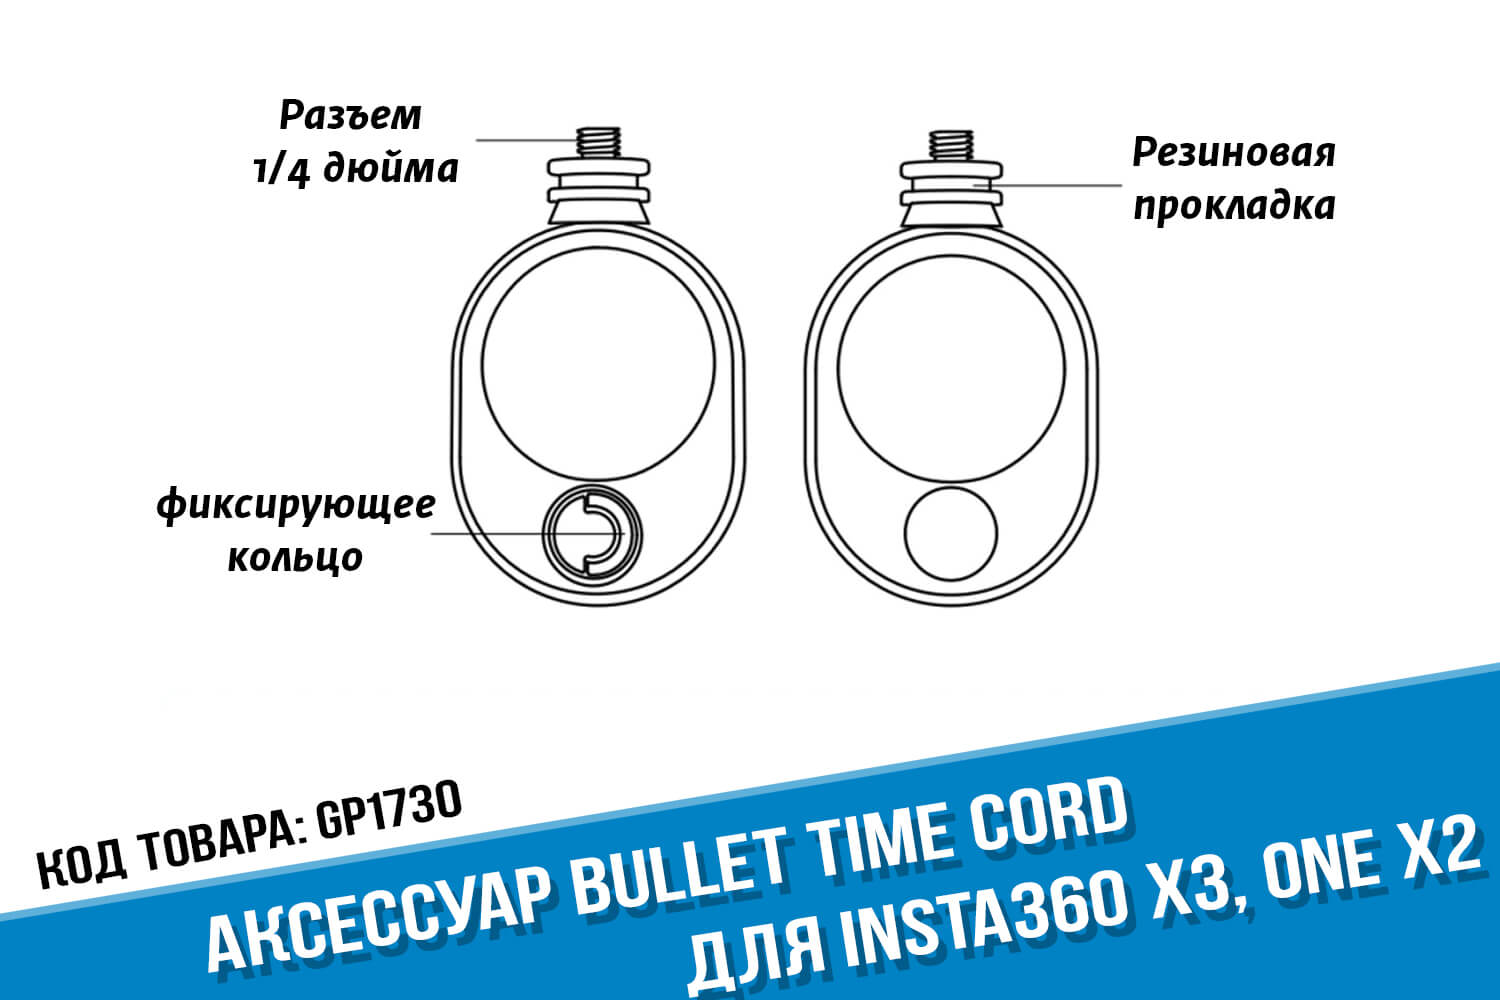 Аксессуар Bullet Time Cord экшн-камеры Insta360